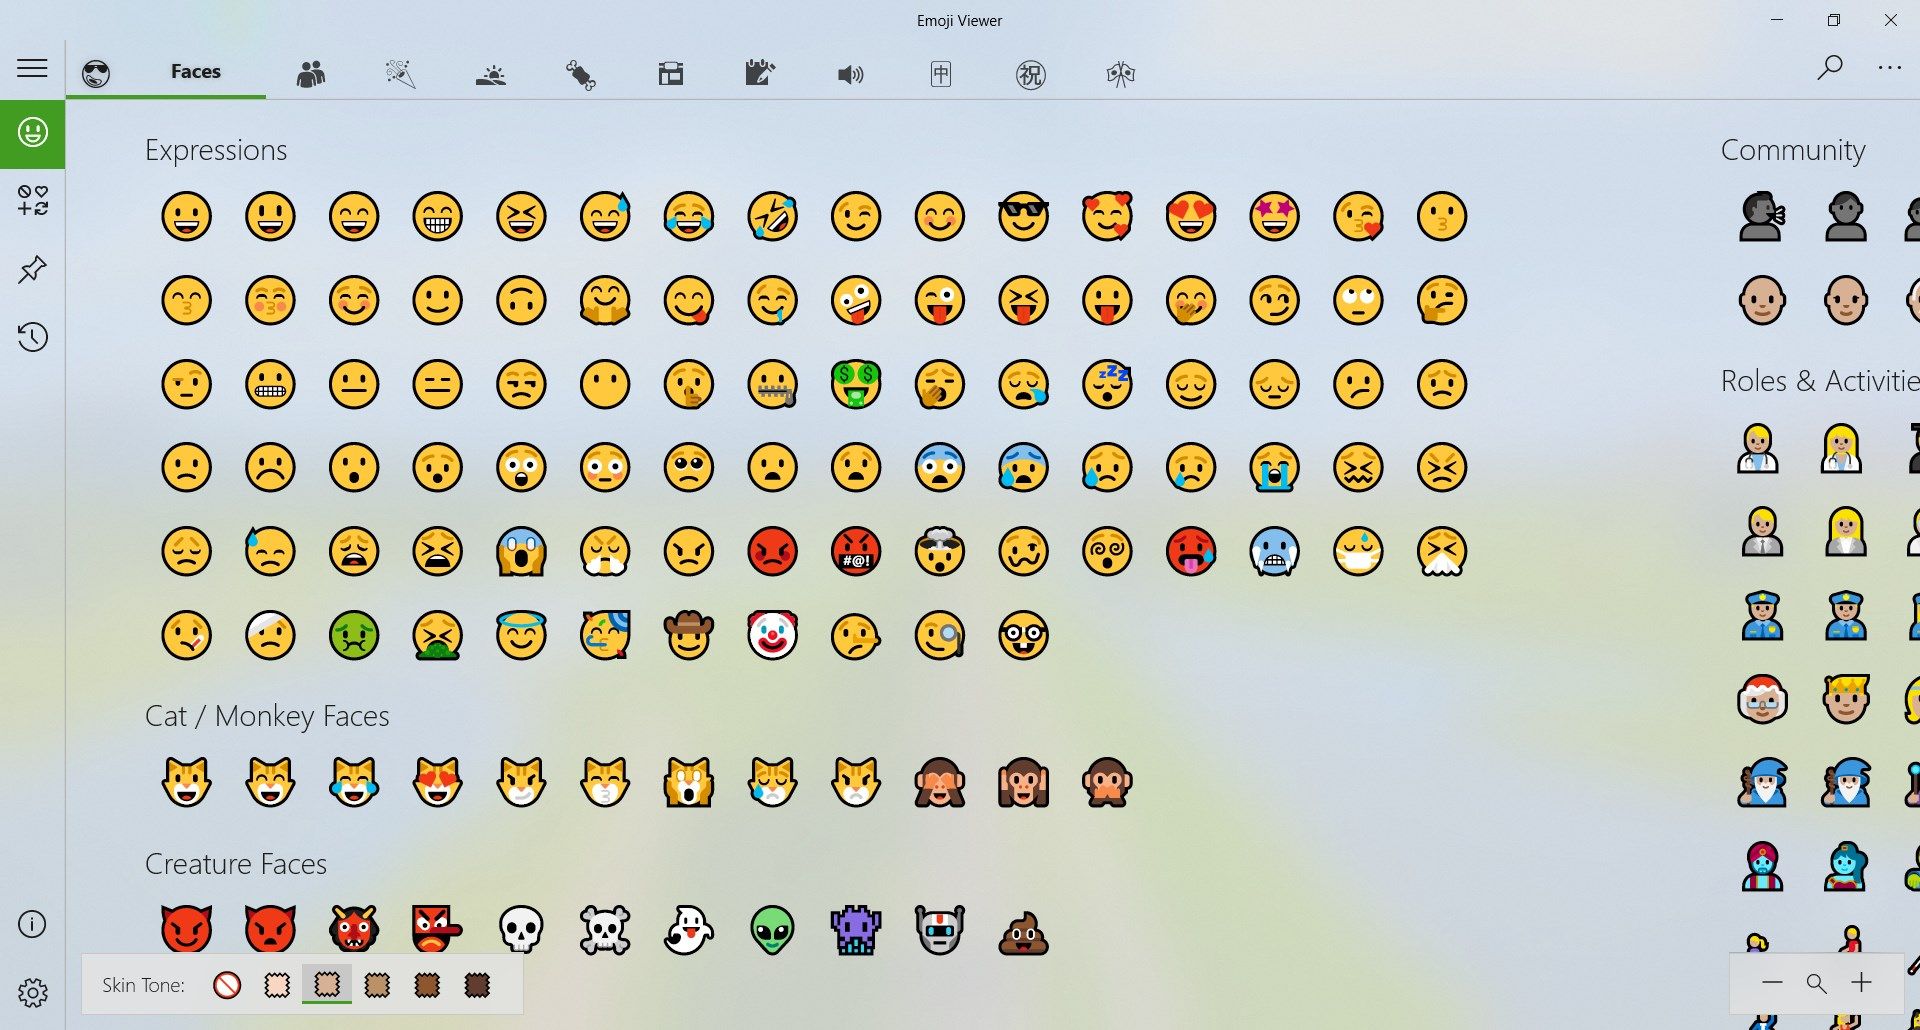 Categorized Emoji / Symbols